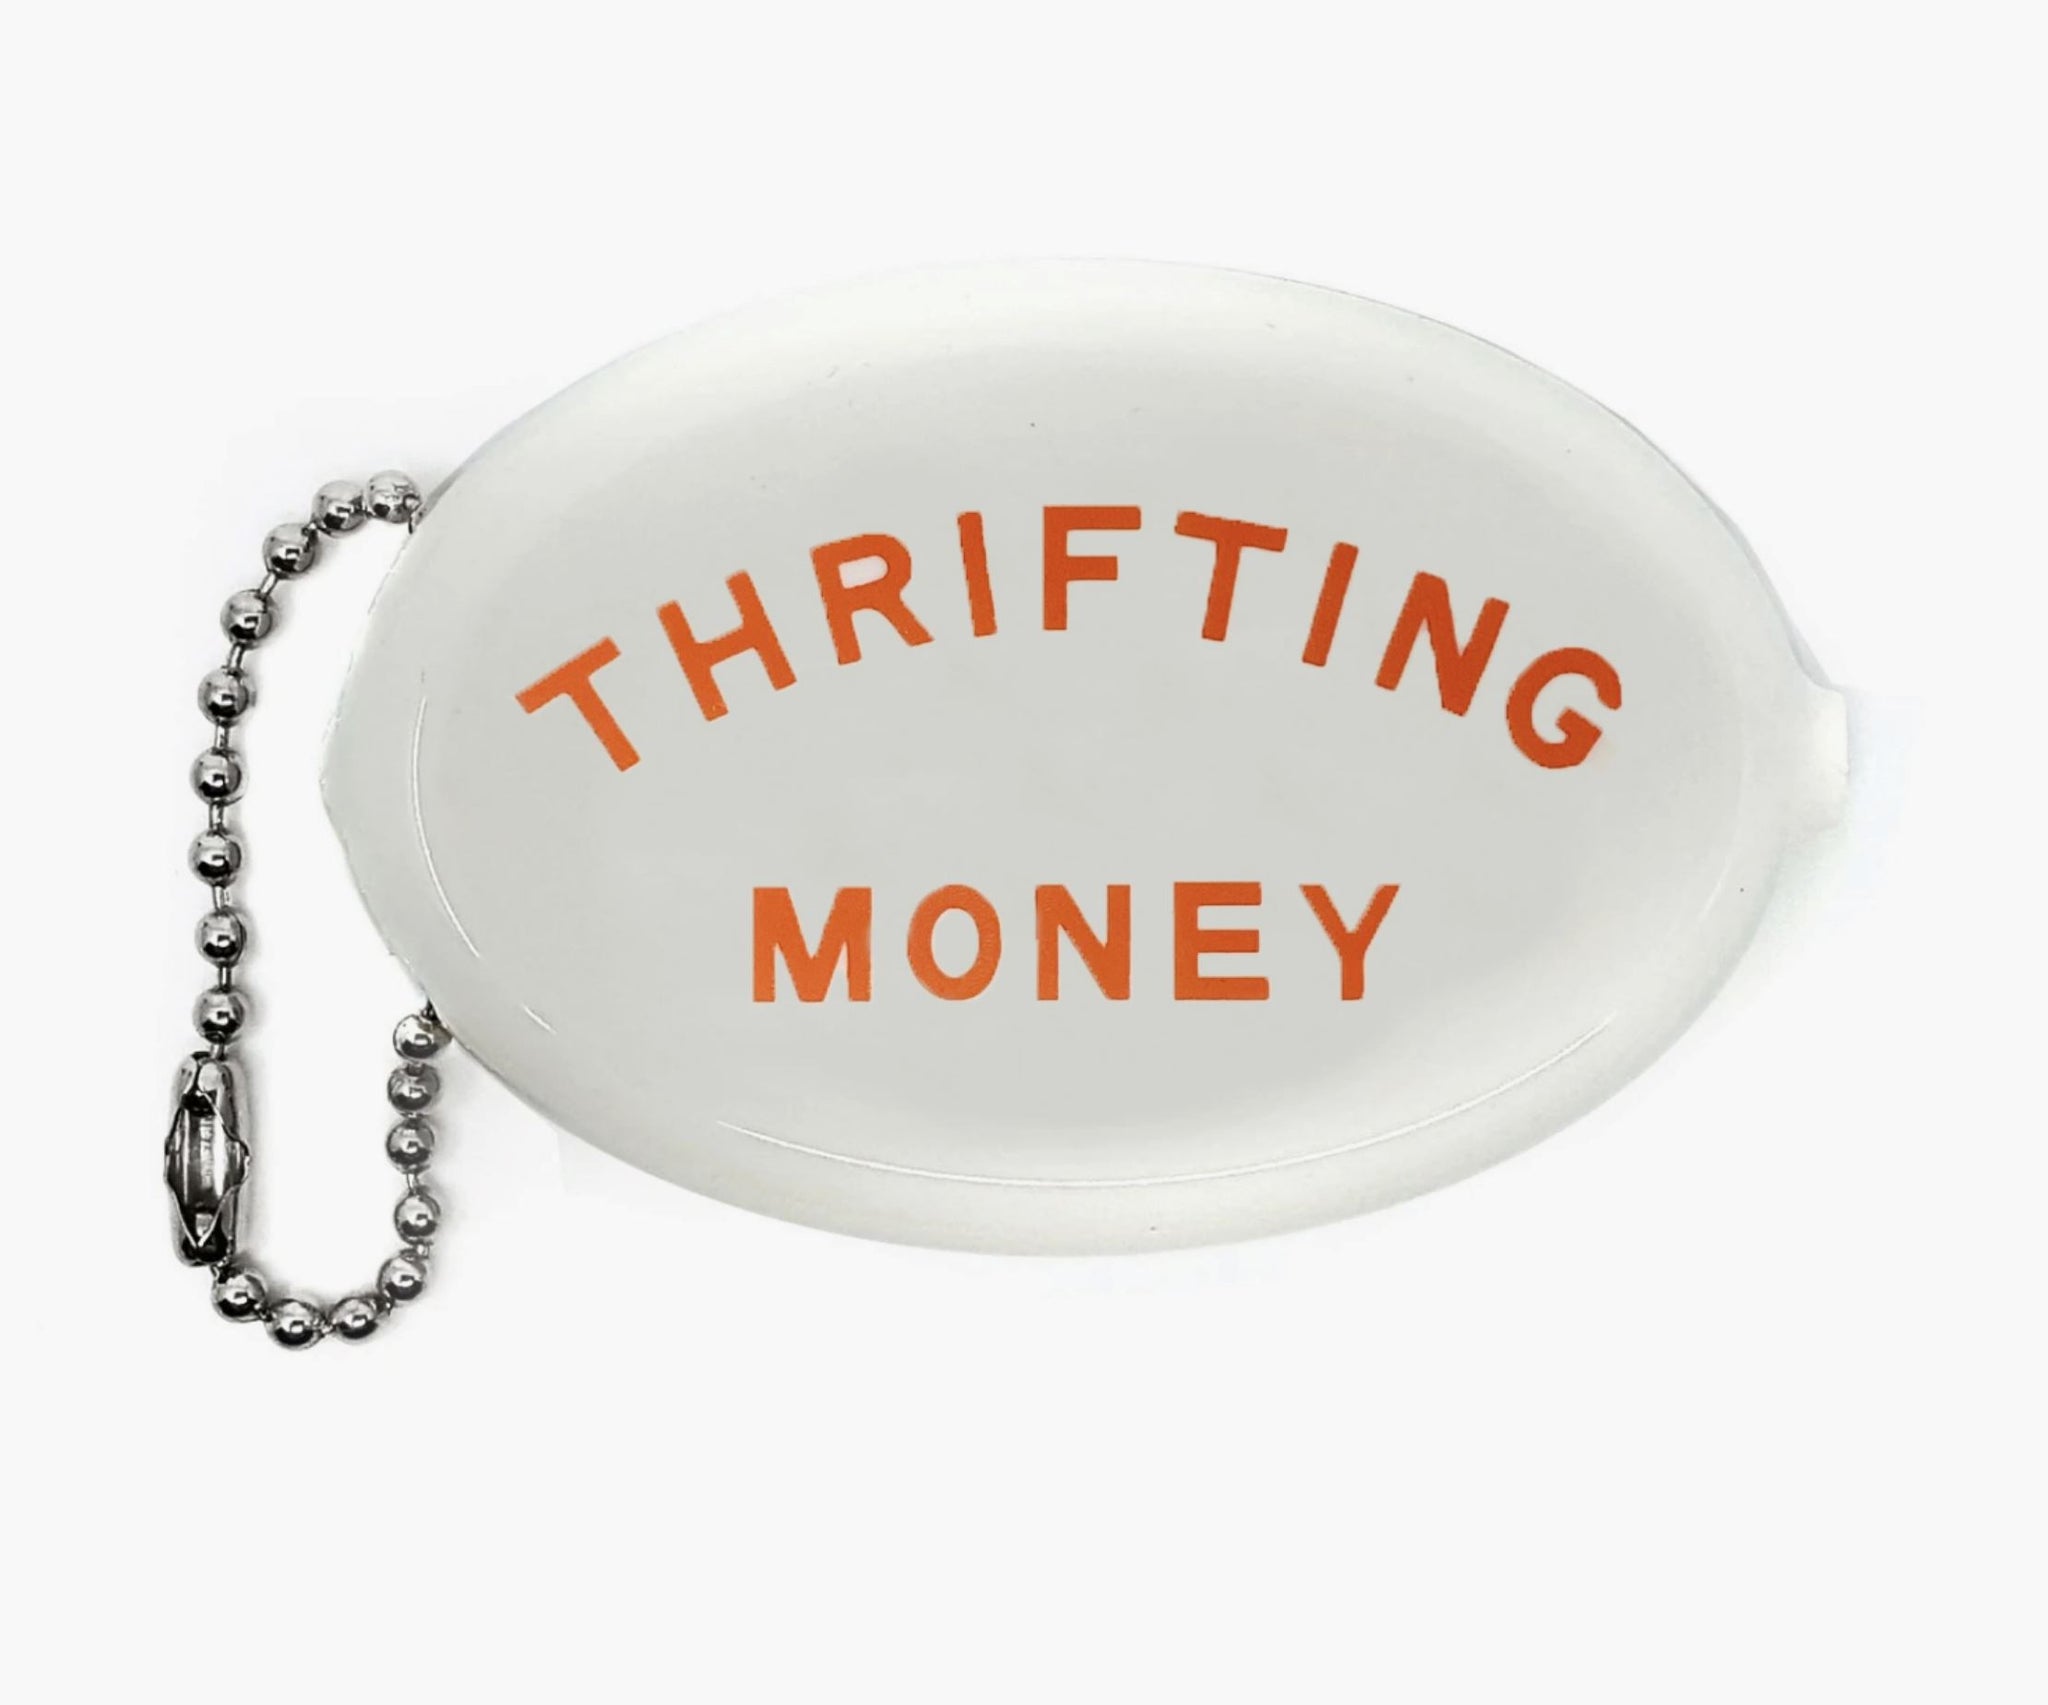 Thrifting Money Coin Pouch x Three Potato Four - Third Drawer Down